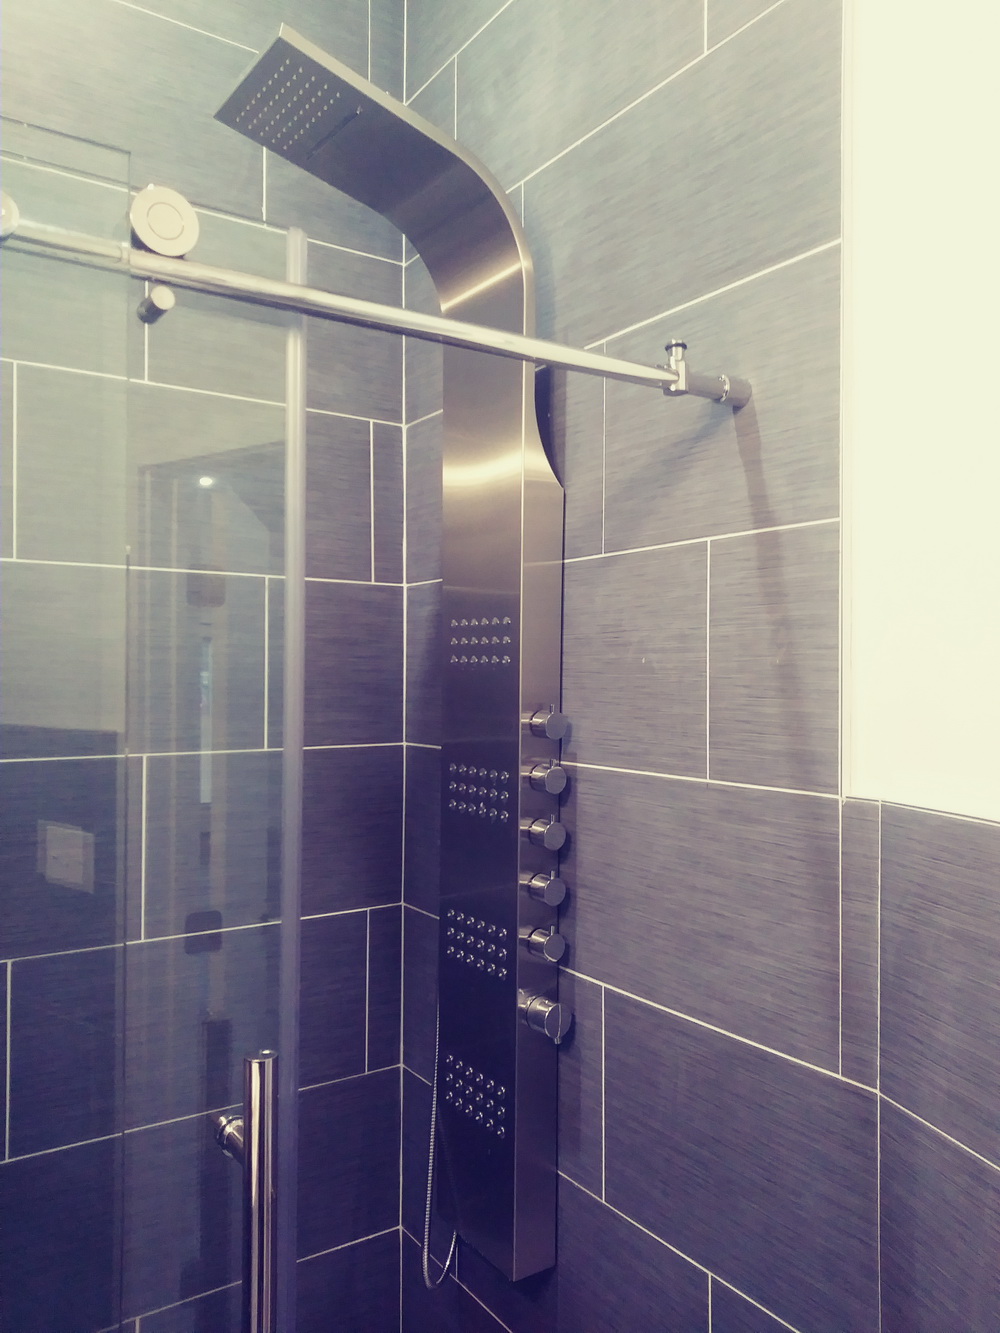 Shower Panel System